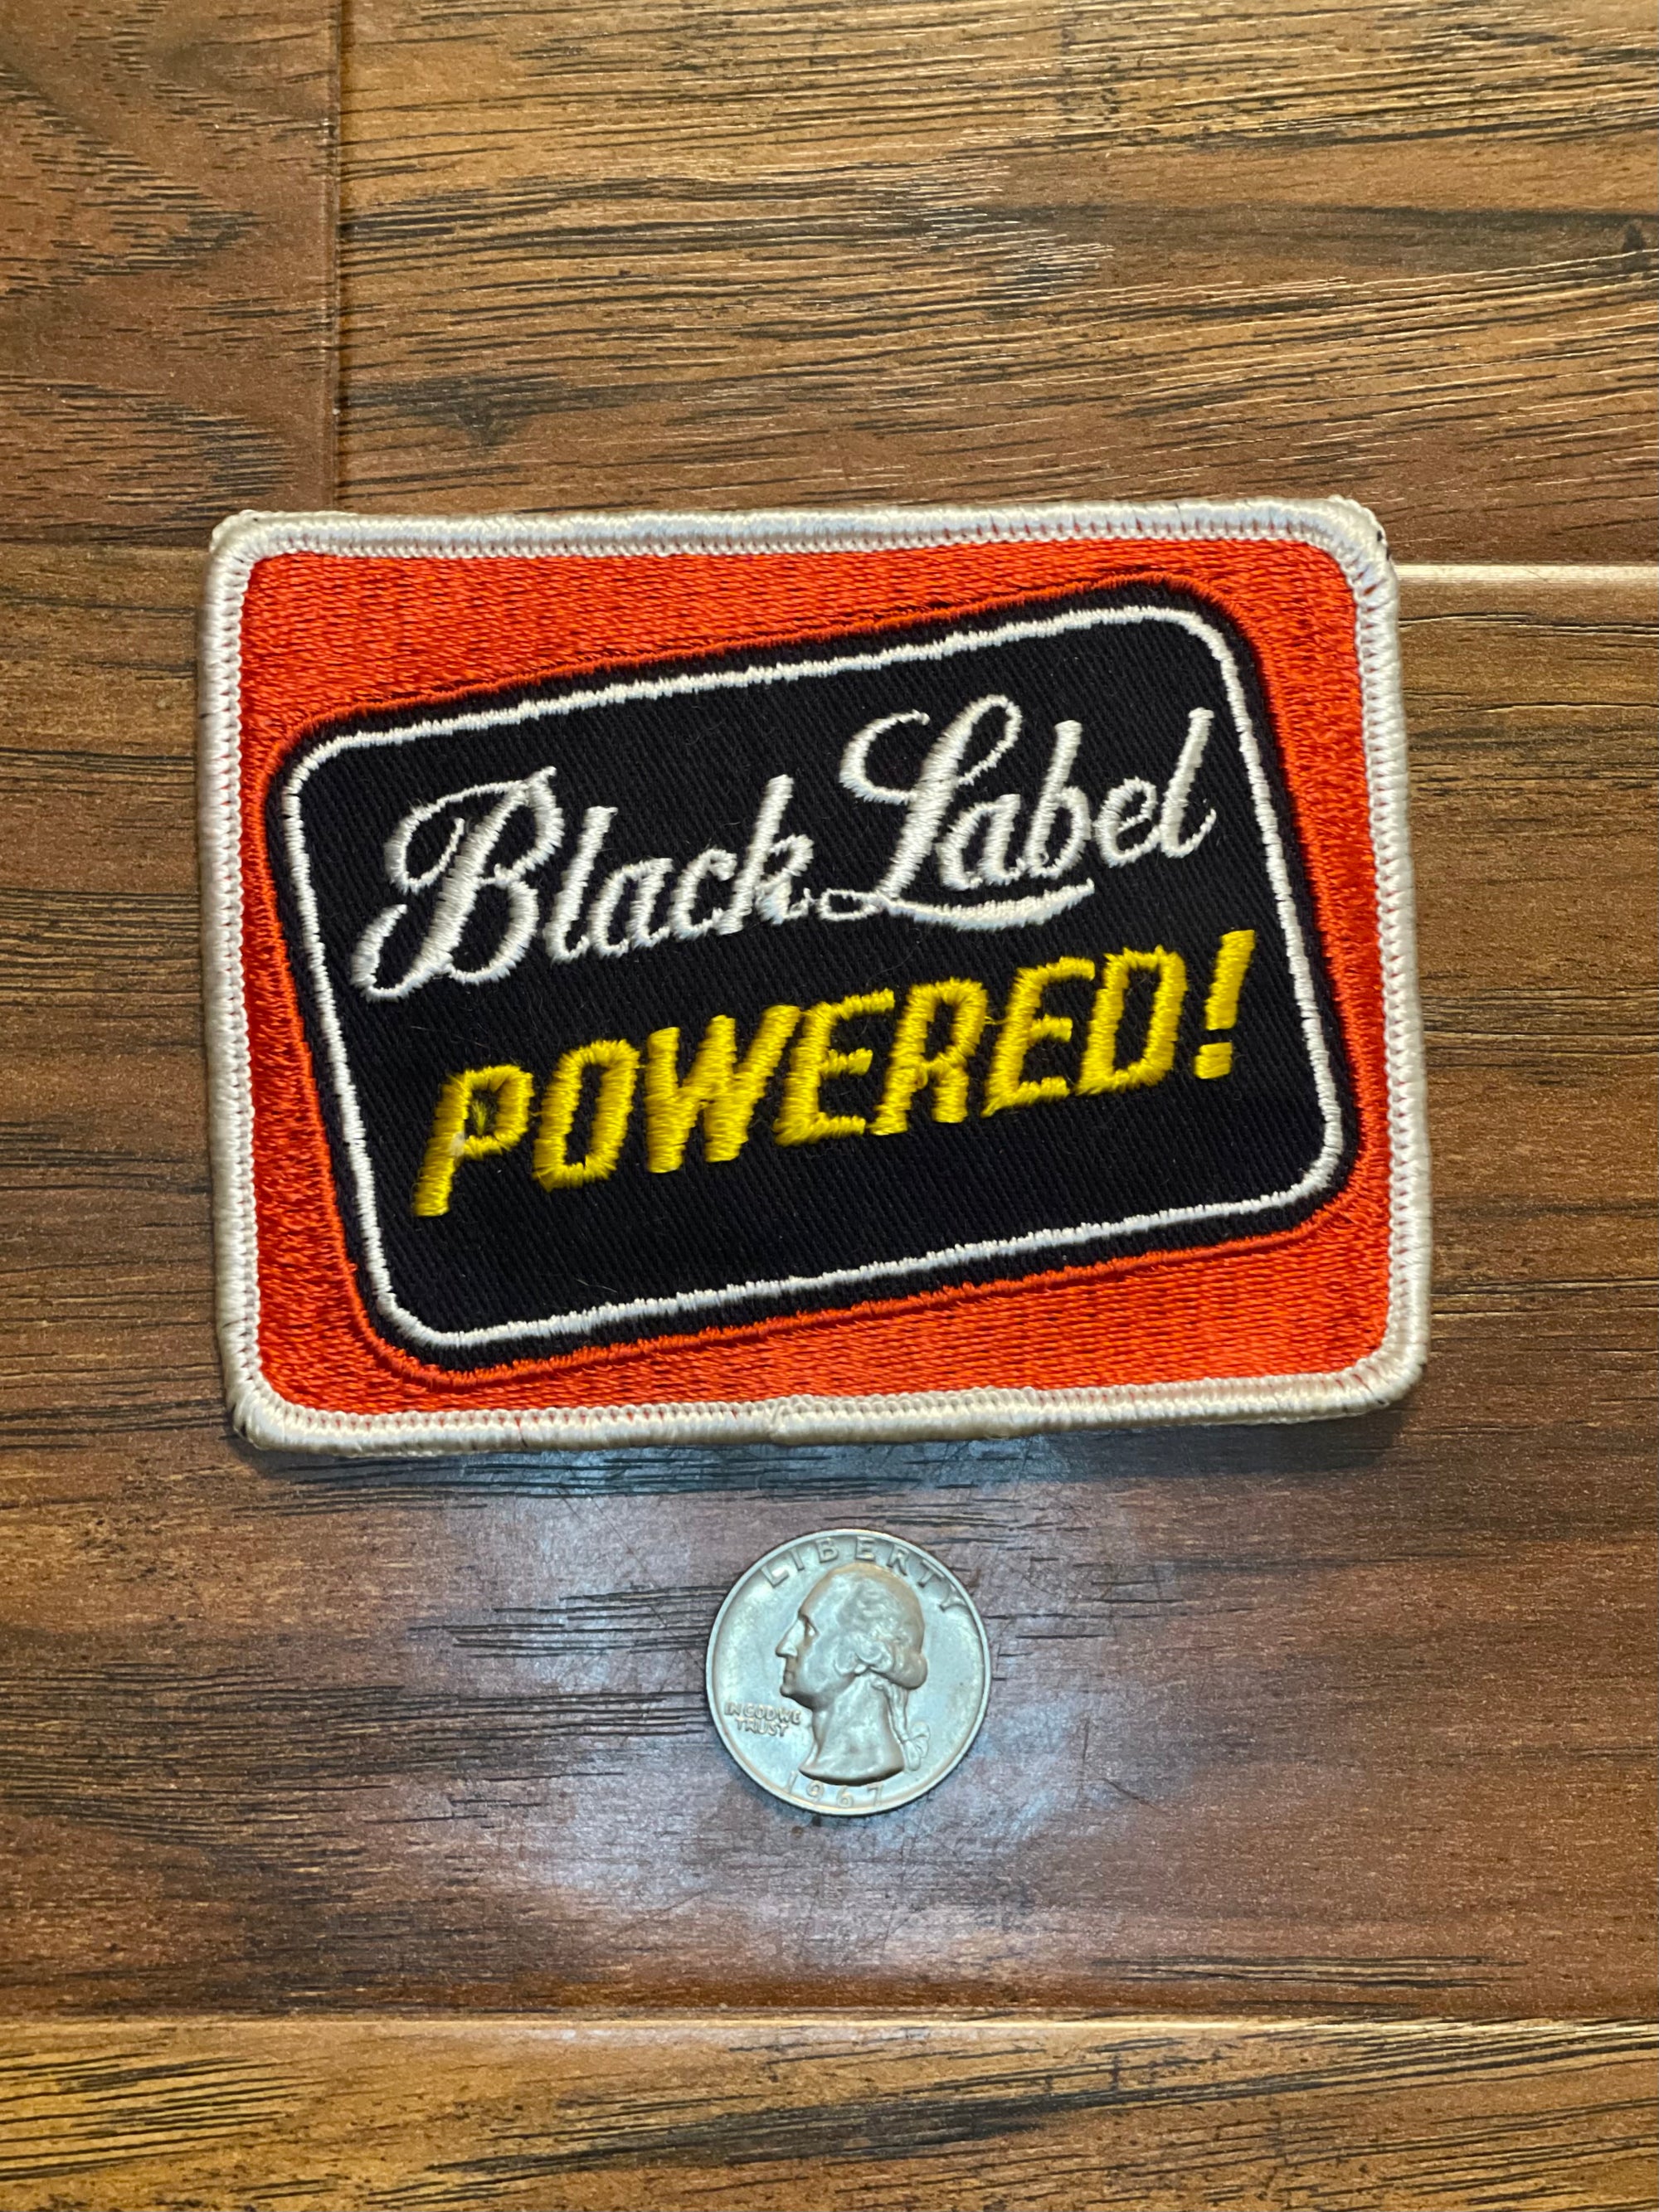 Vintage Black Label Powered